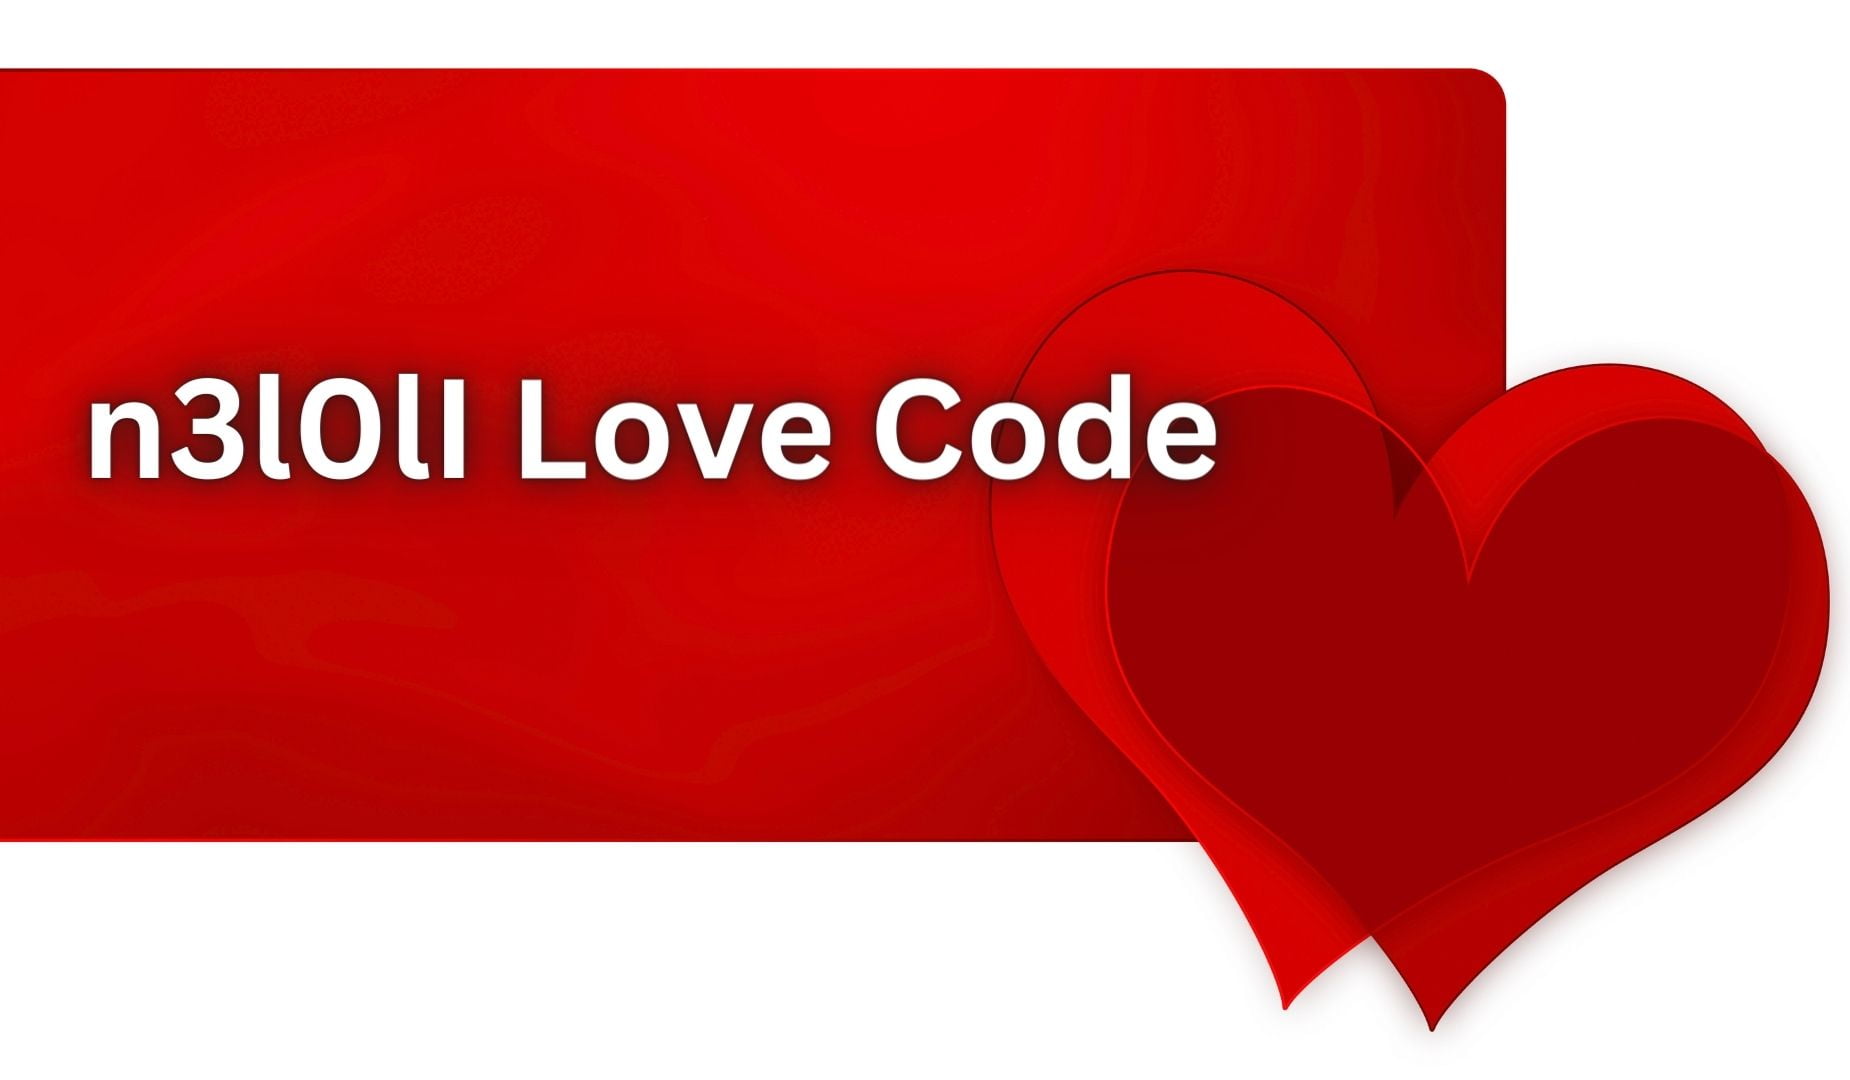 Лов код. Люблю тебя на математическом языке. I Love code. Код i Love you в цифрах. I Love you to code.